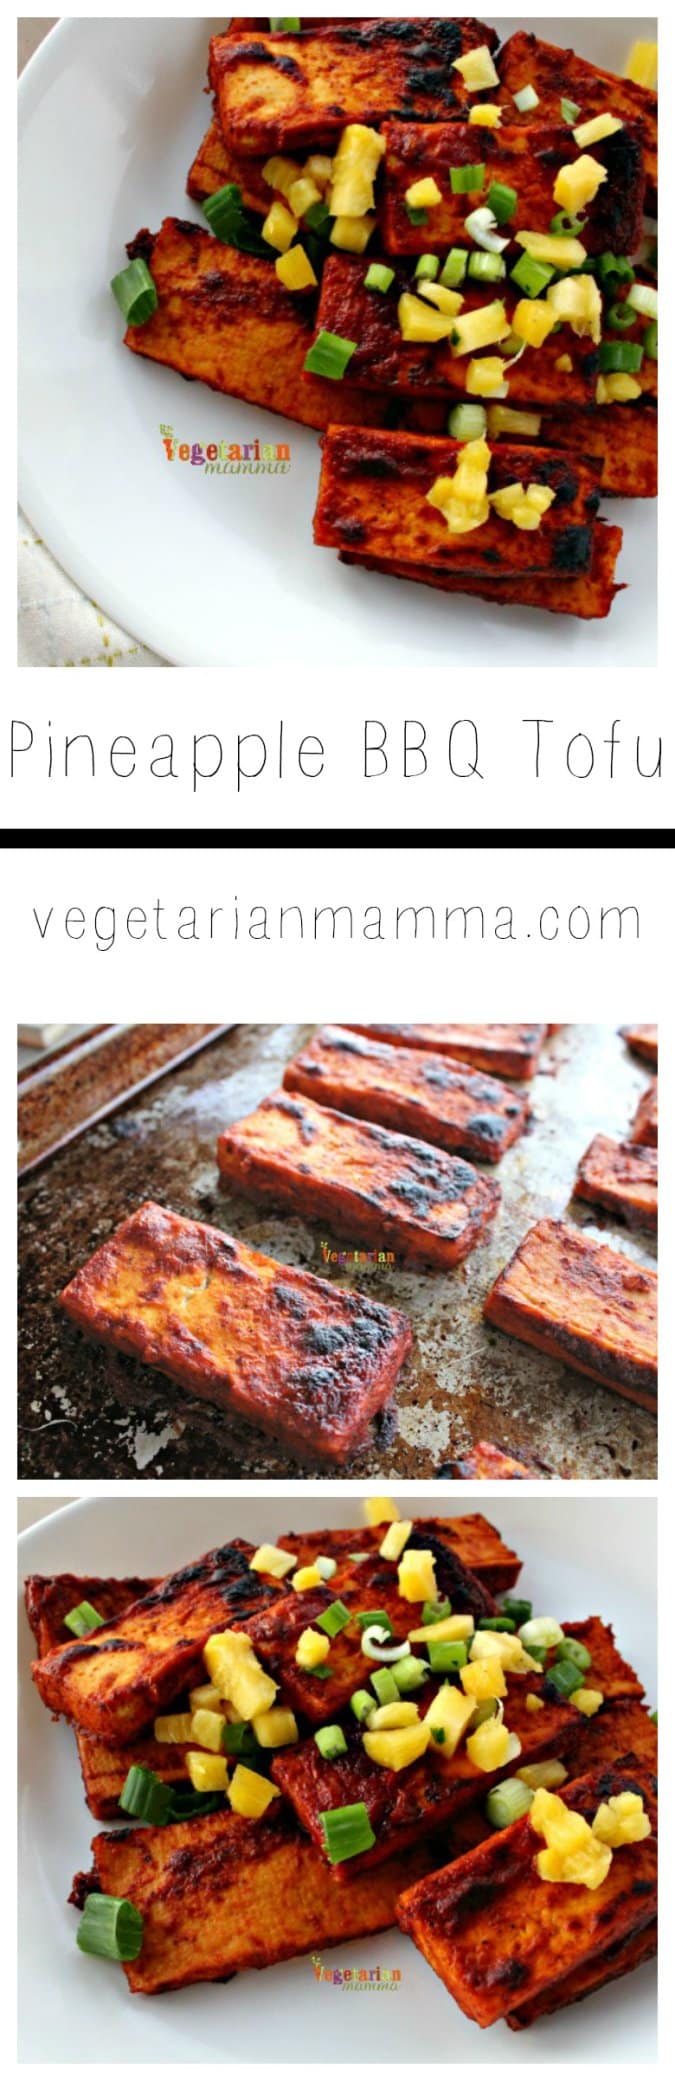 Pineapple BBQ Tofu @vegetarianmamma.com #tofu #pineapple #broil #vegetarian #BBQ